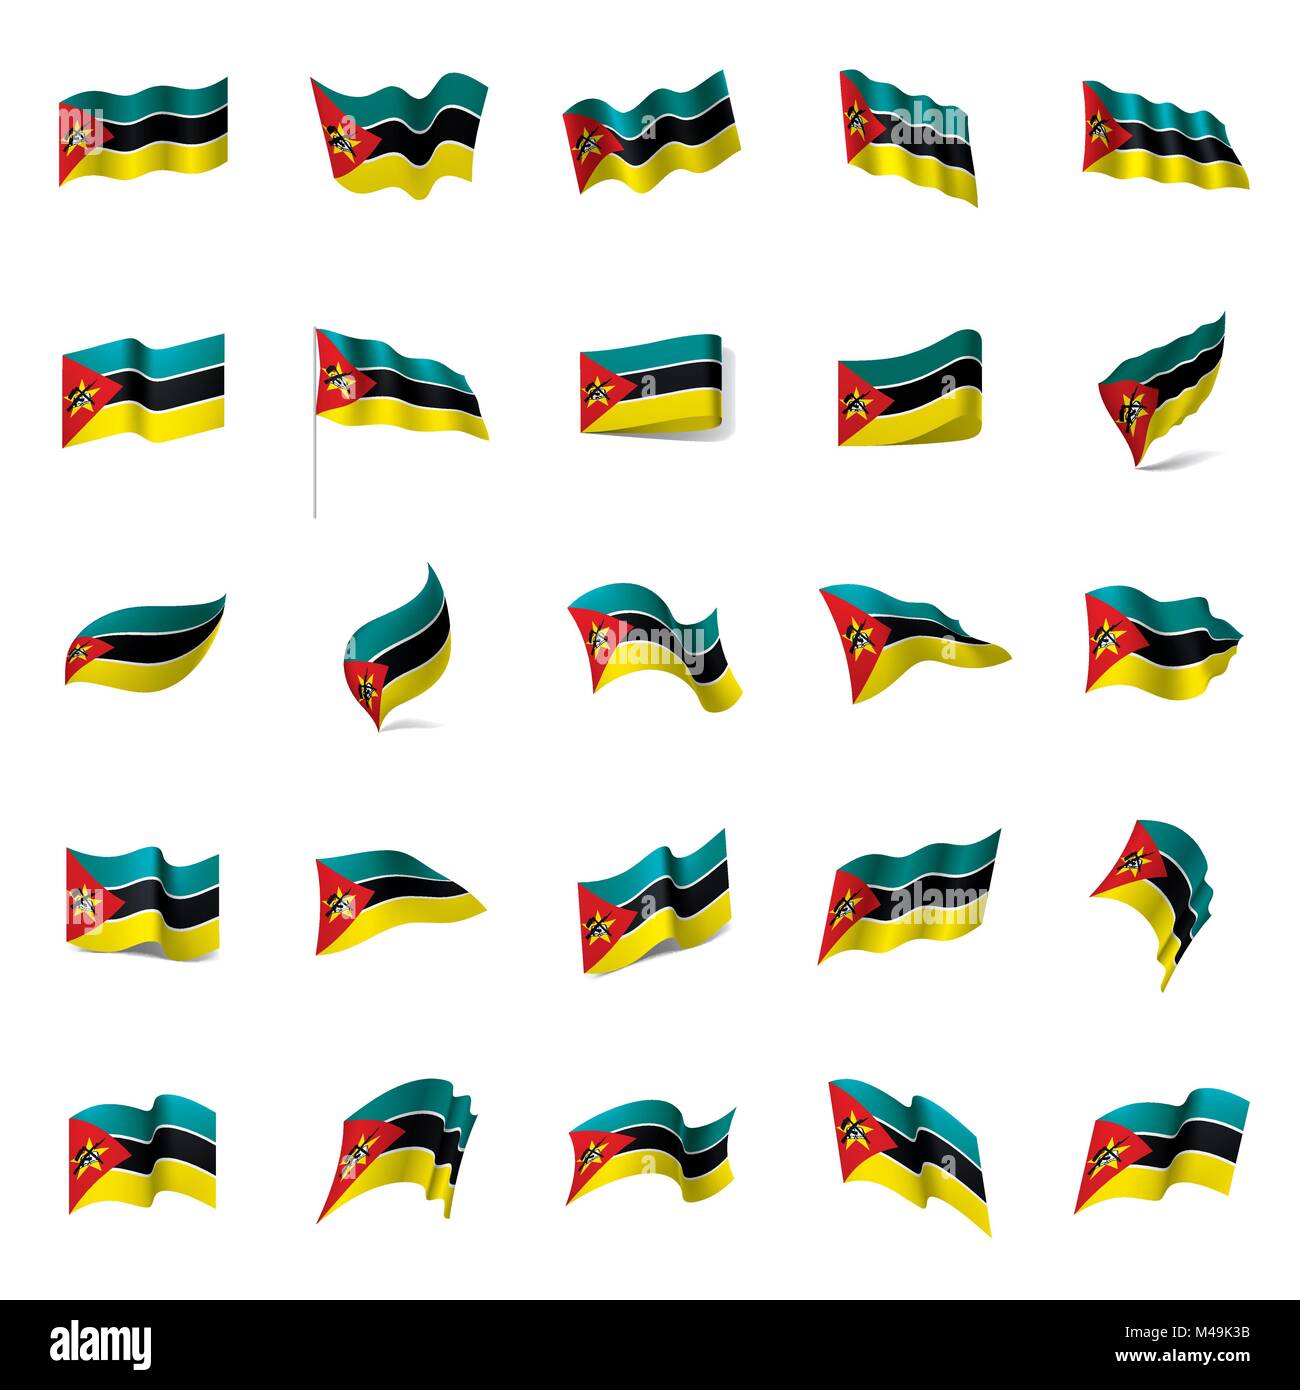 Mozambique flag, vector illustration Stock Vector